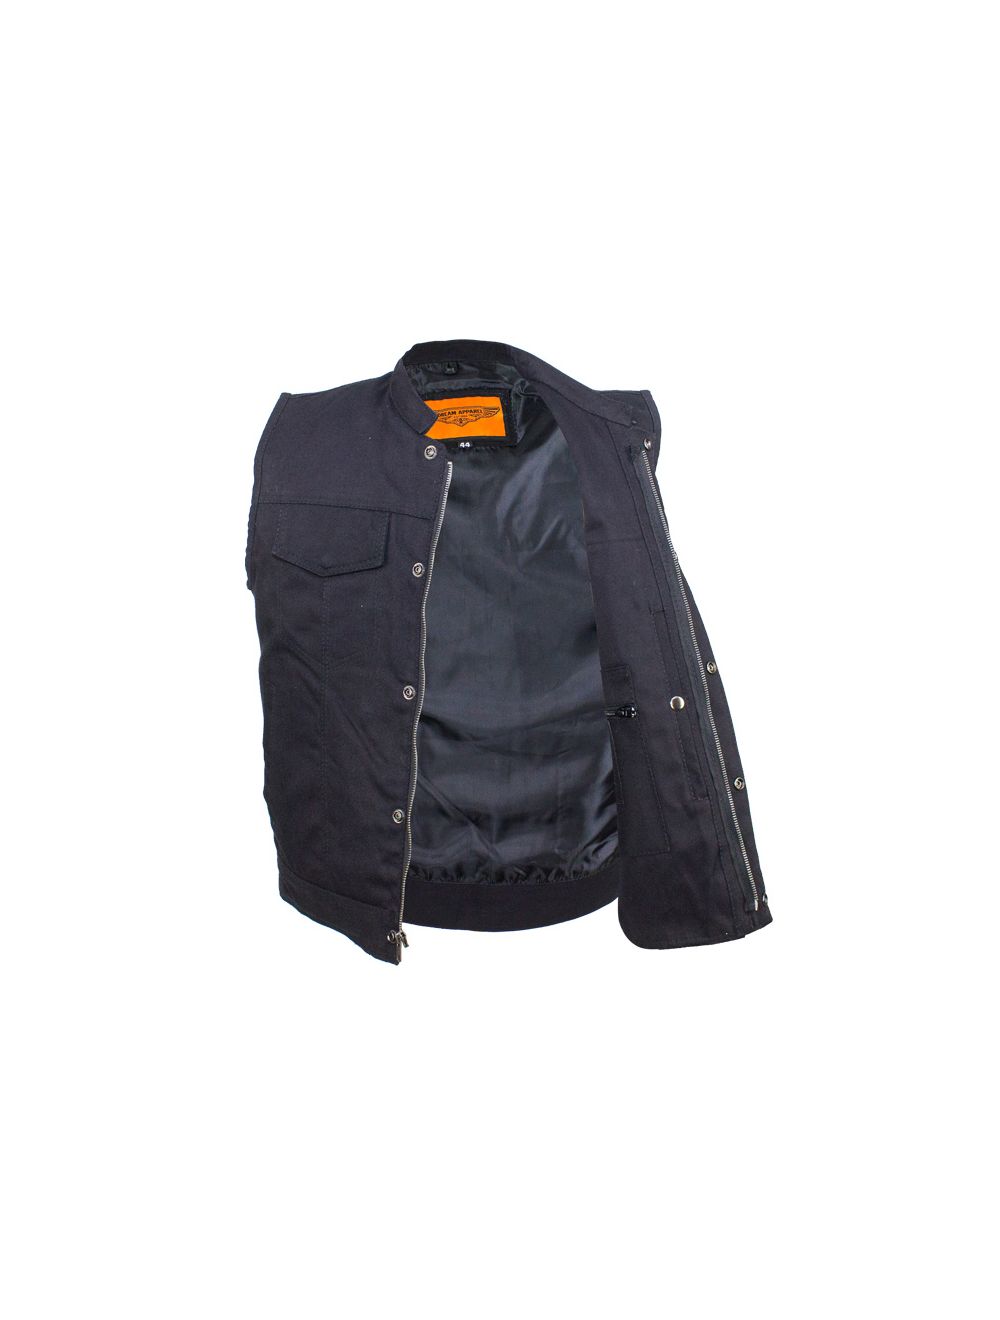 Mens Black Denim Motorcycle CLUB VEST® with Zipper & Button Snap Front  Closure, Gun Pockets